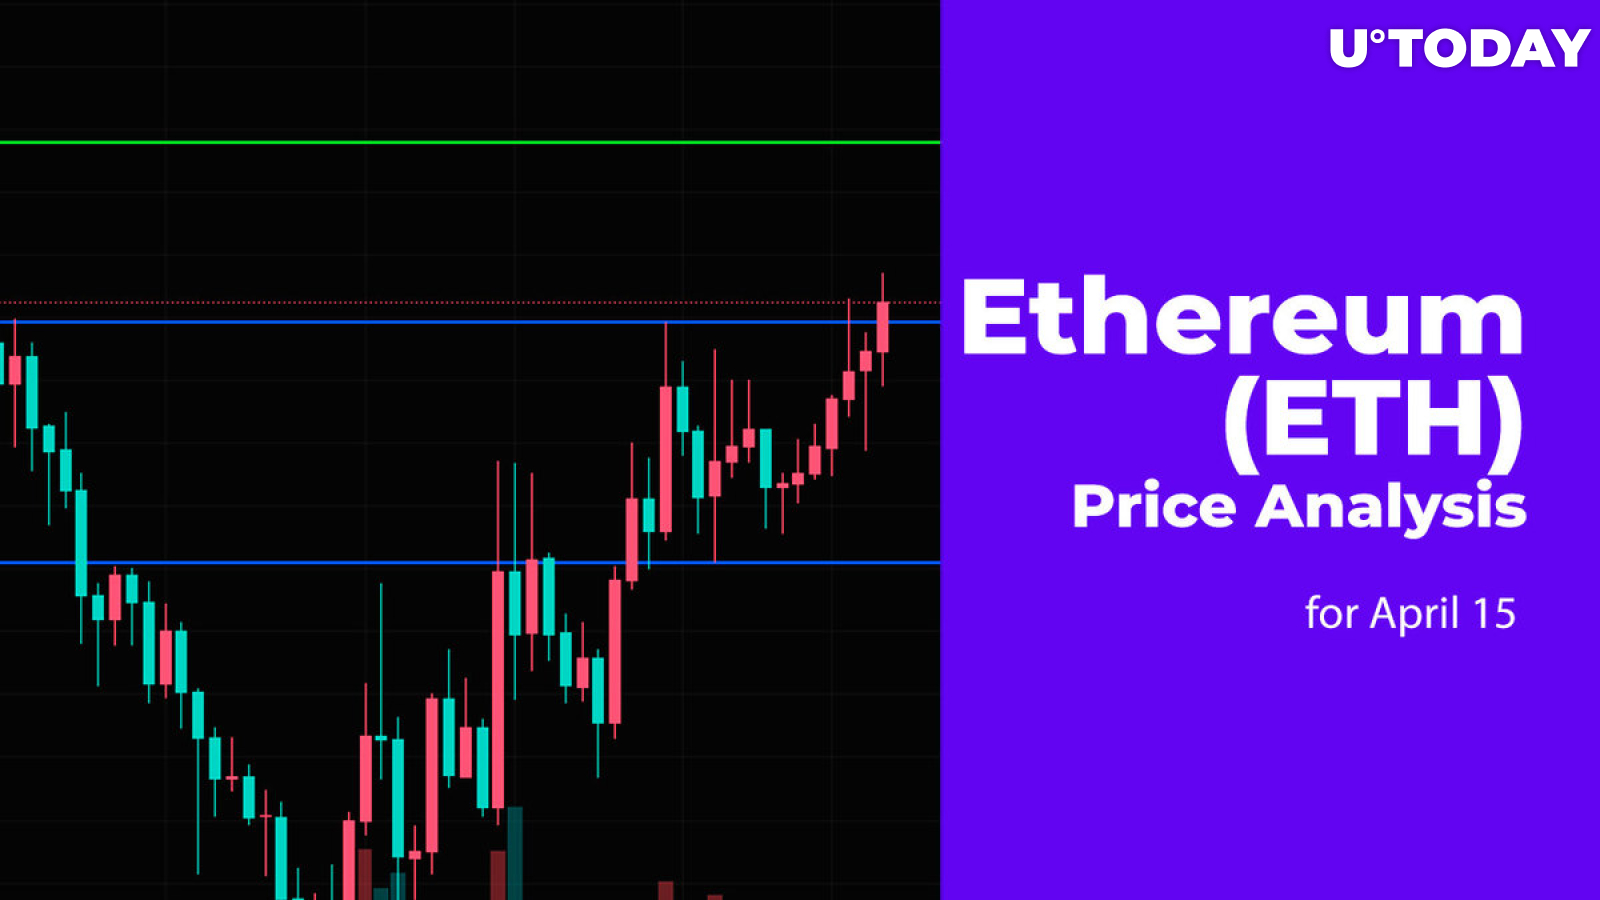 Ethereum (ETH) Price Analysis for April 15